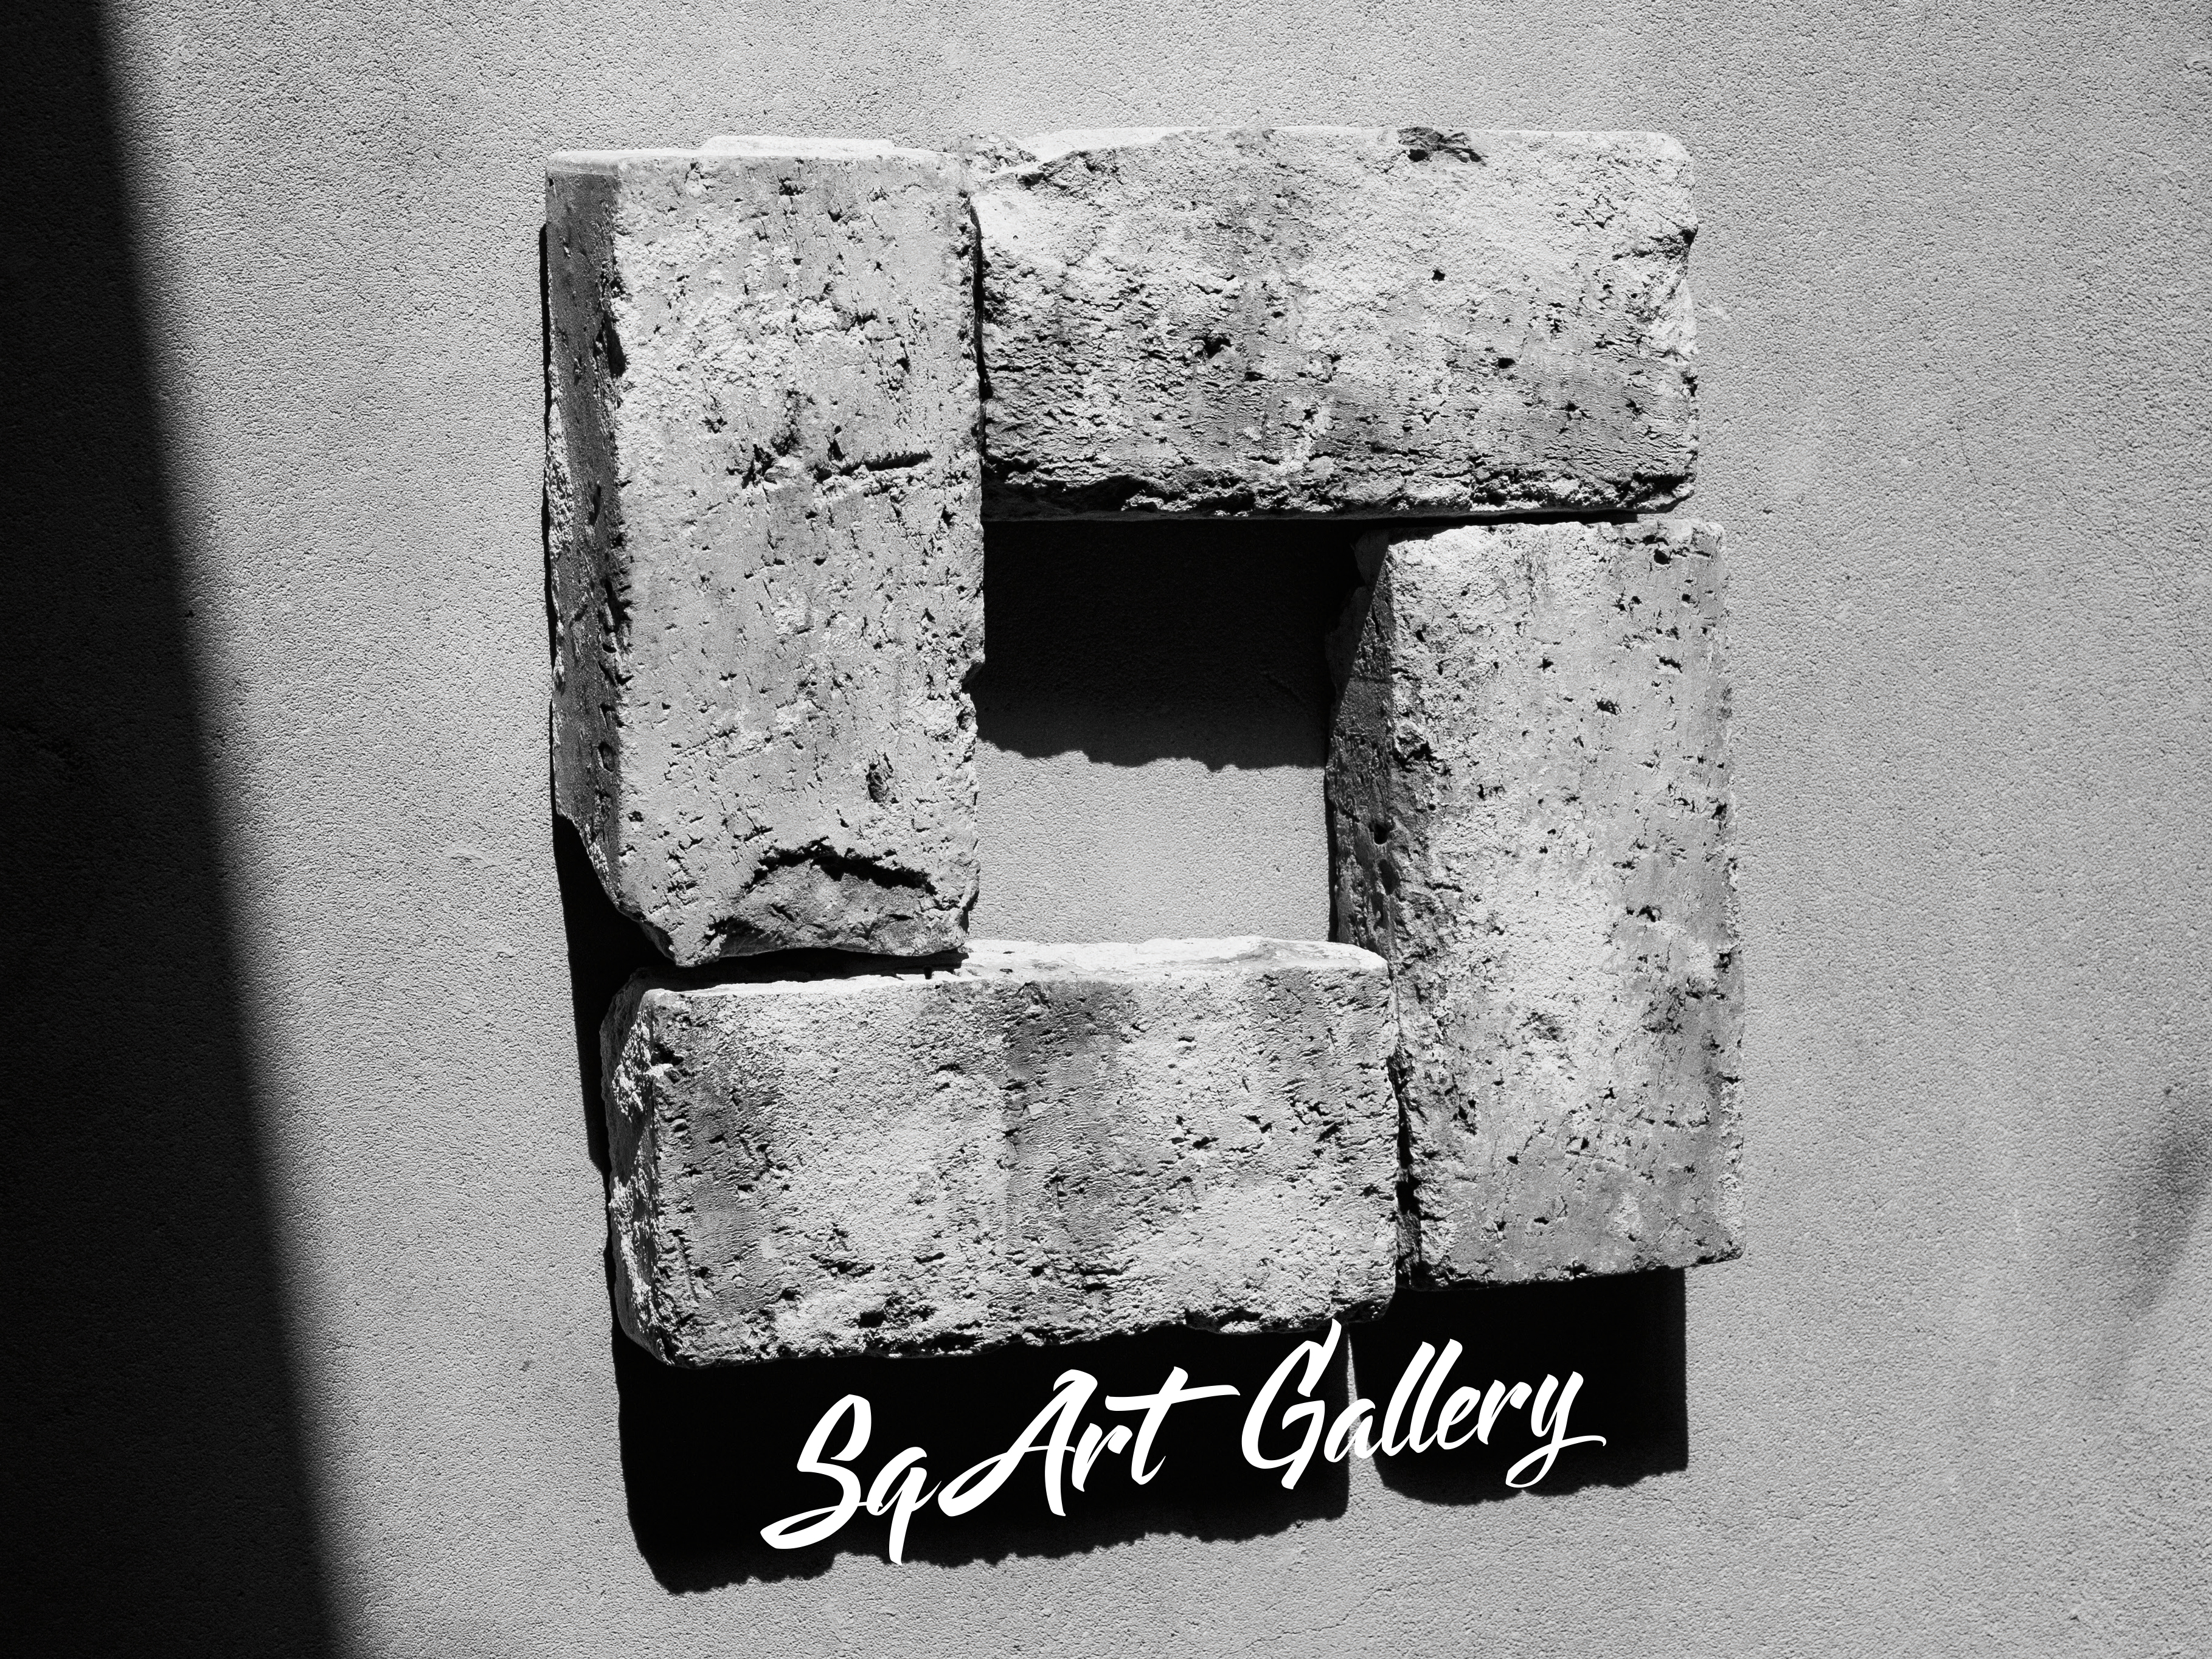 SqArt Gallery